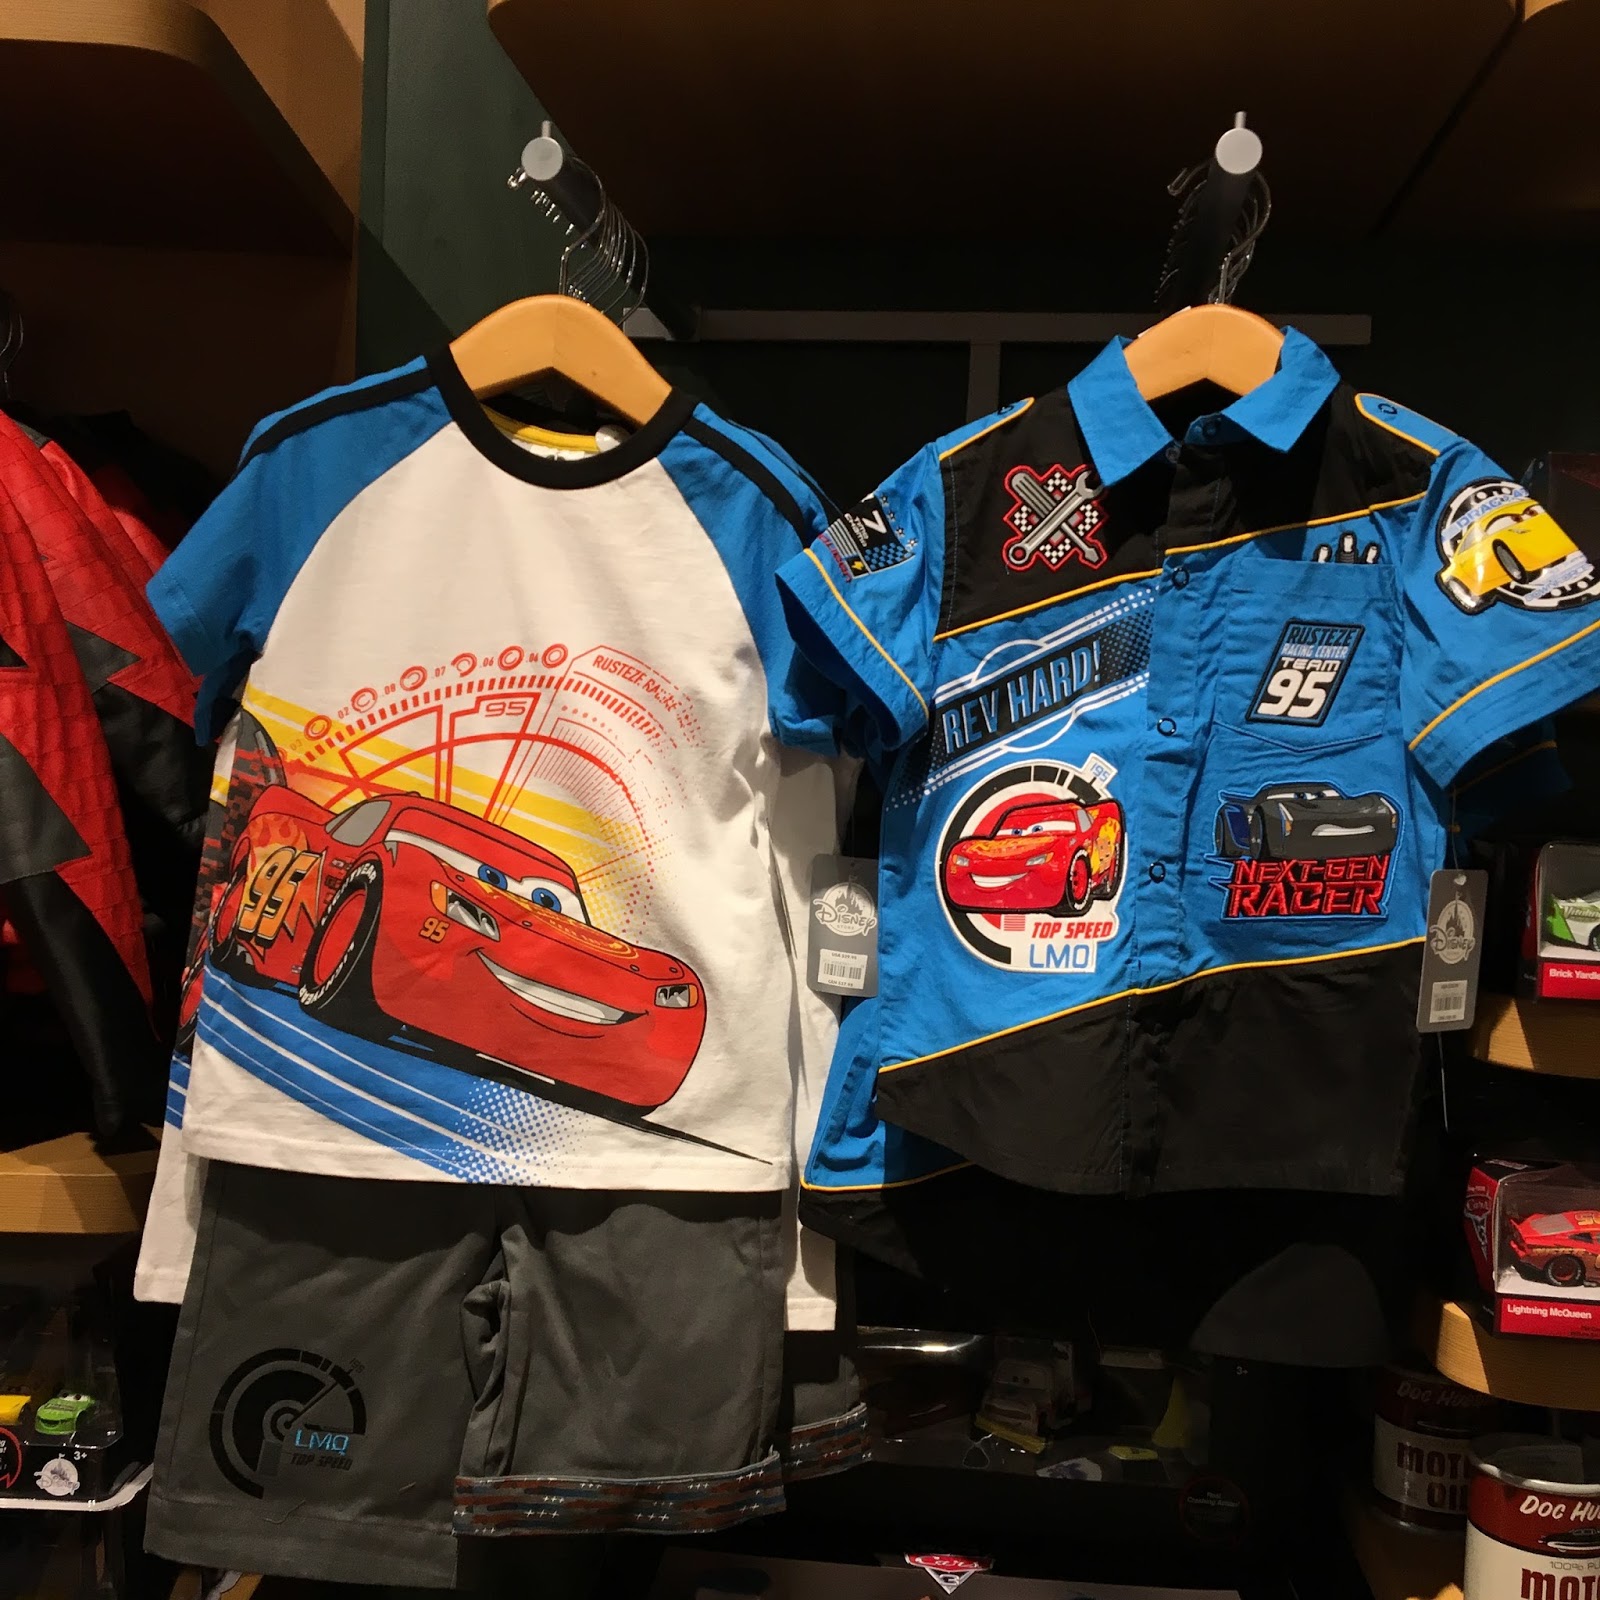 disney store cars 3 merchandise toys display 2017